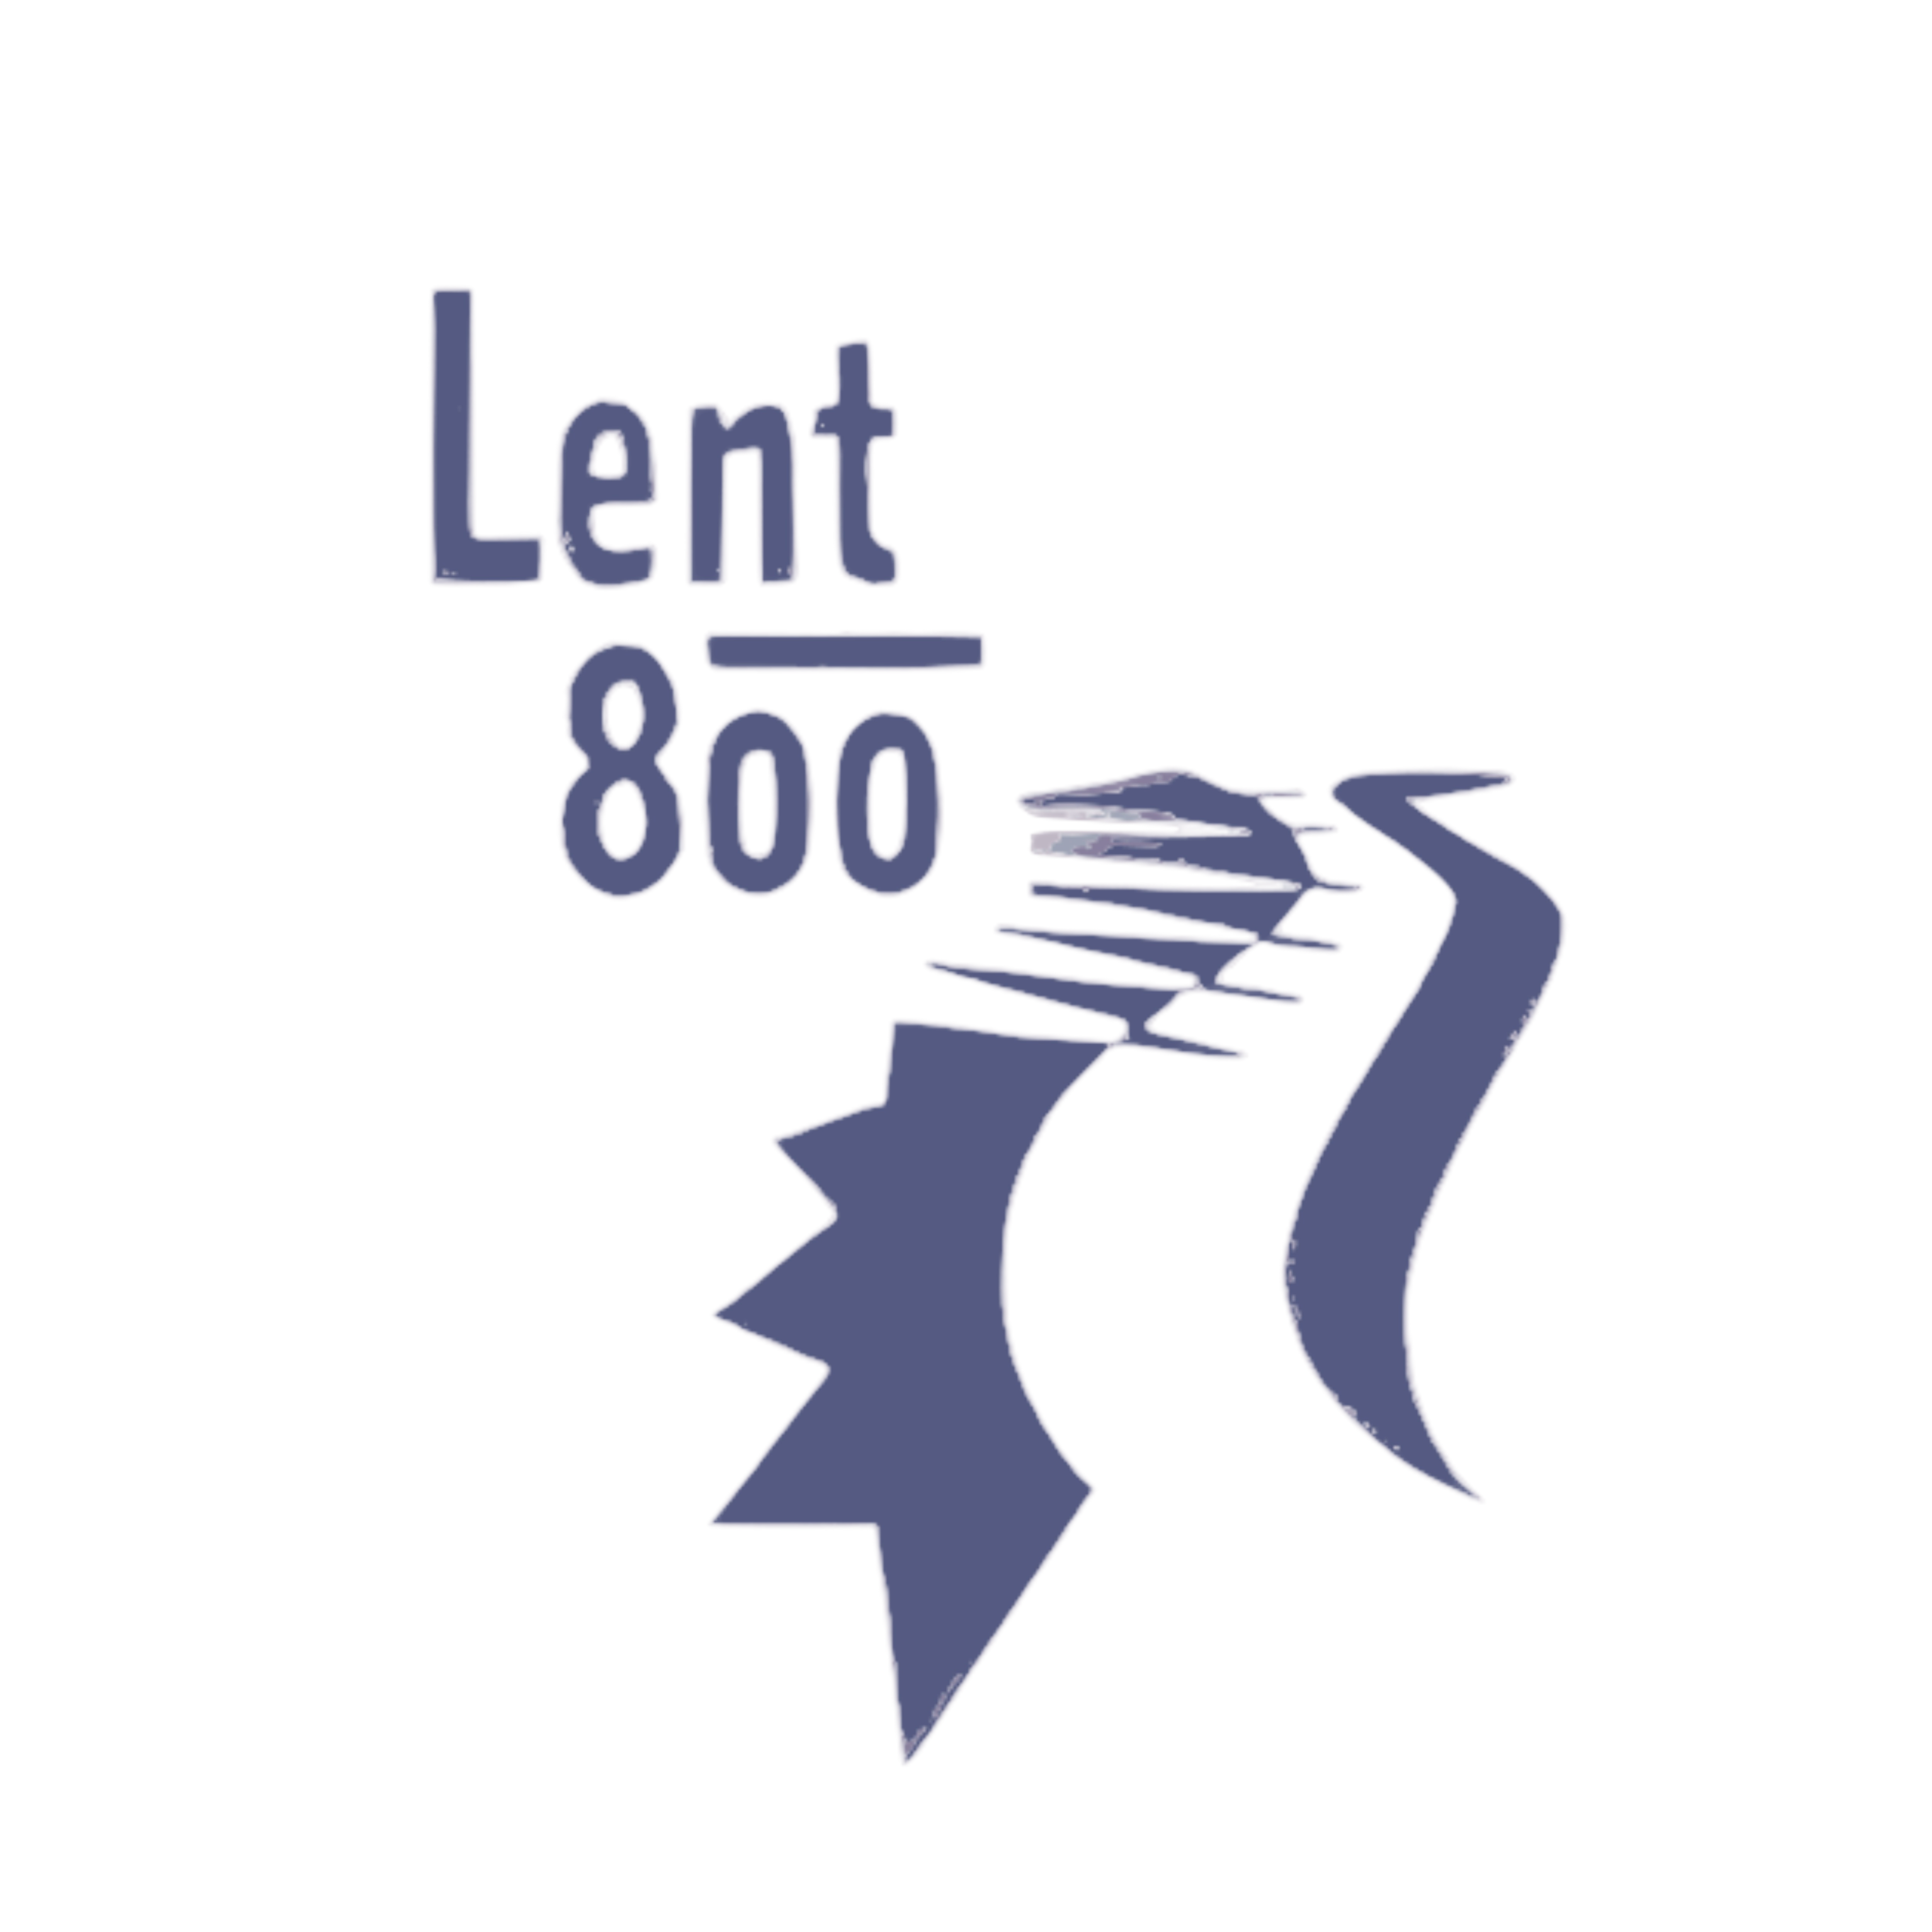 Lent 800 logo